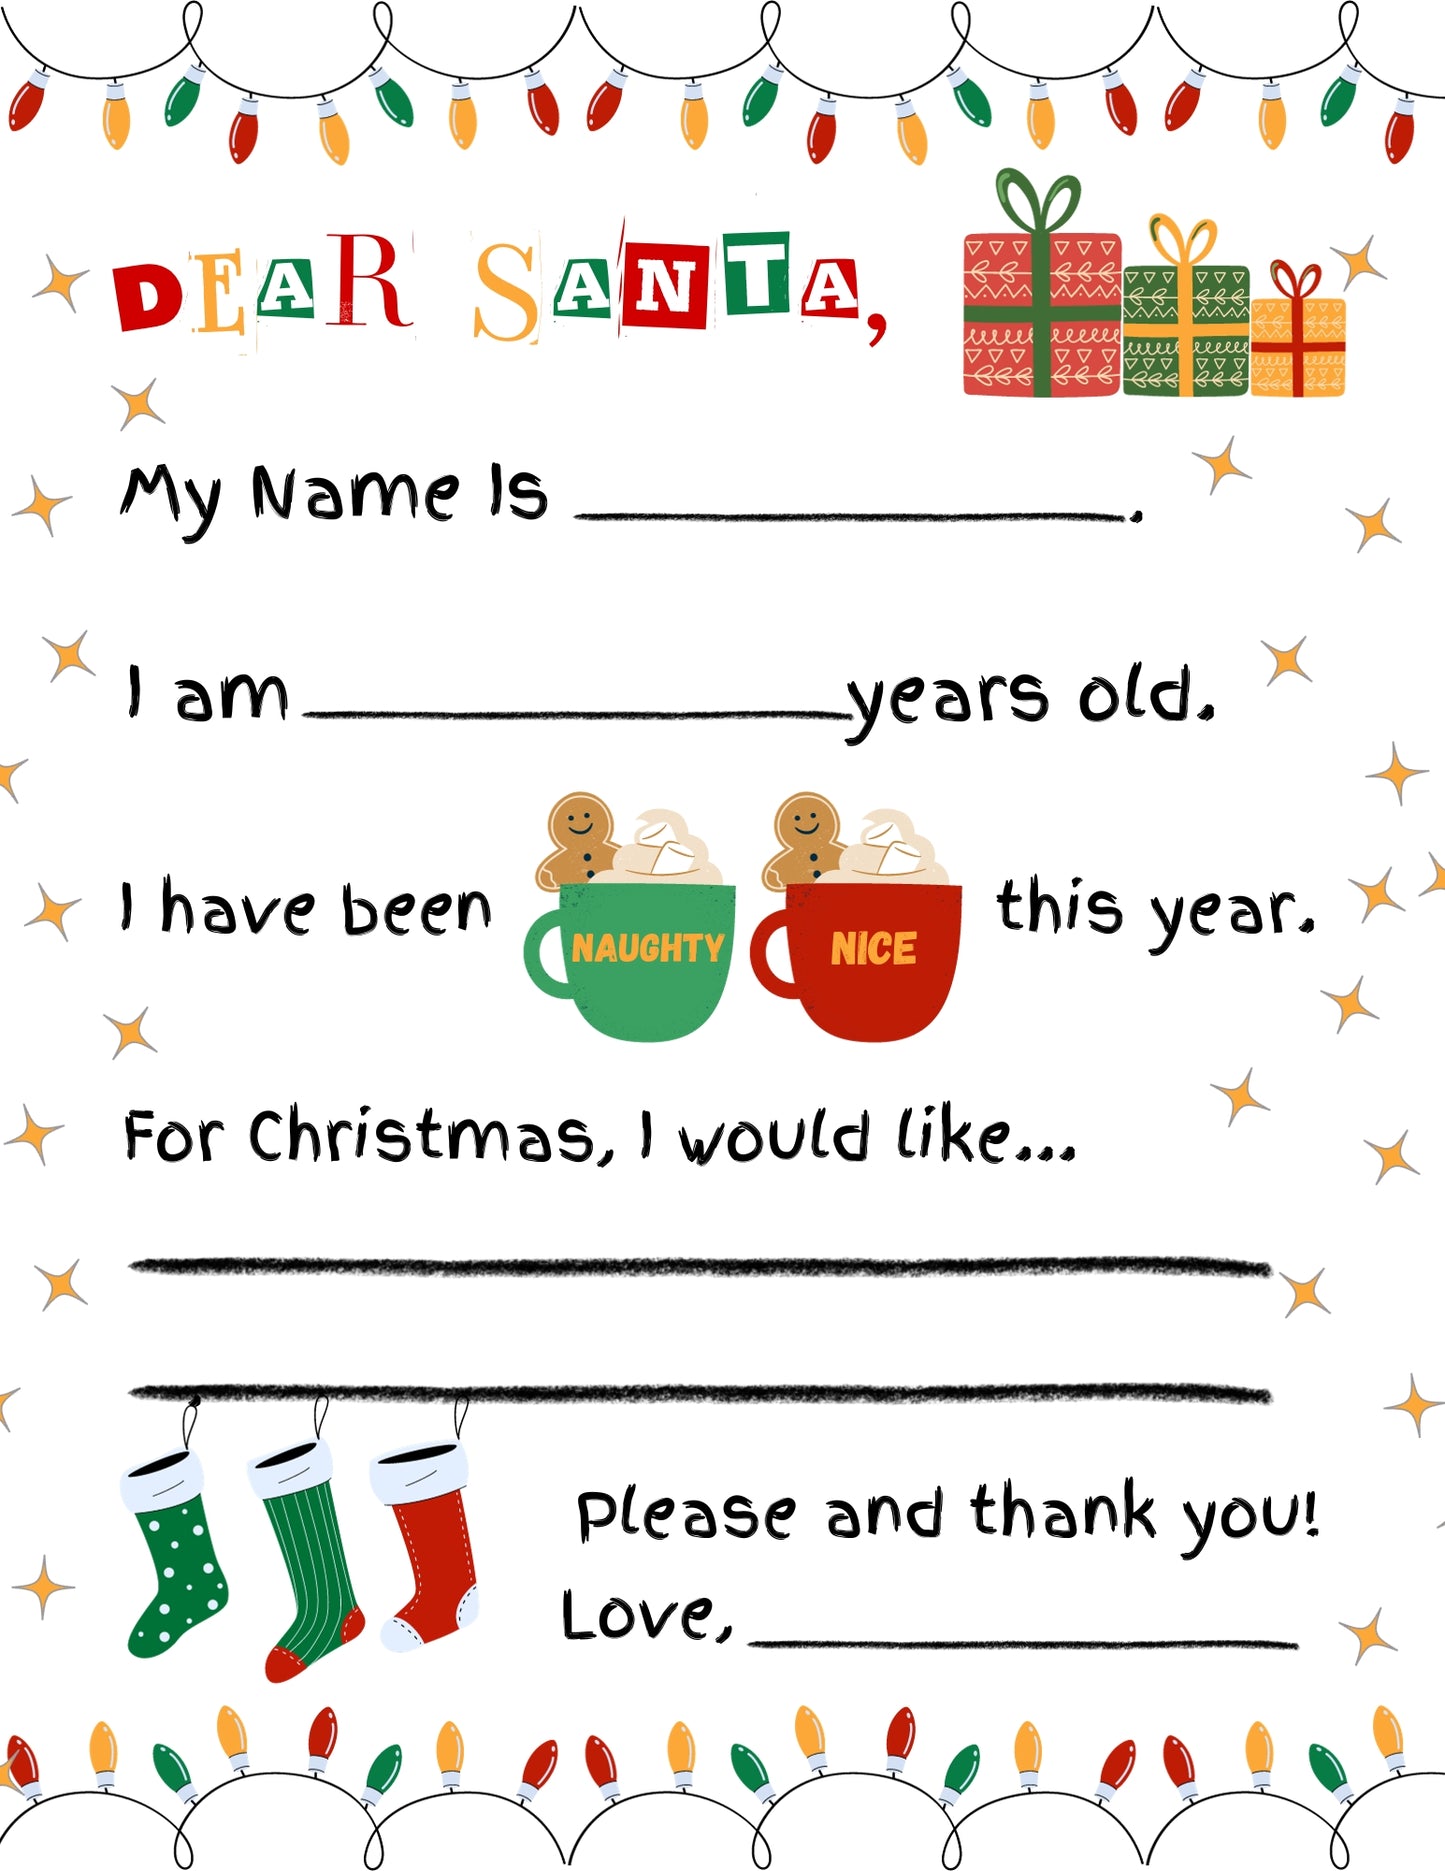 Exclusive Dear Santa Letter Printable